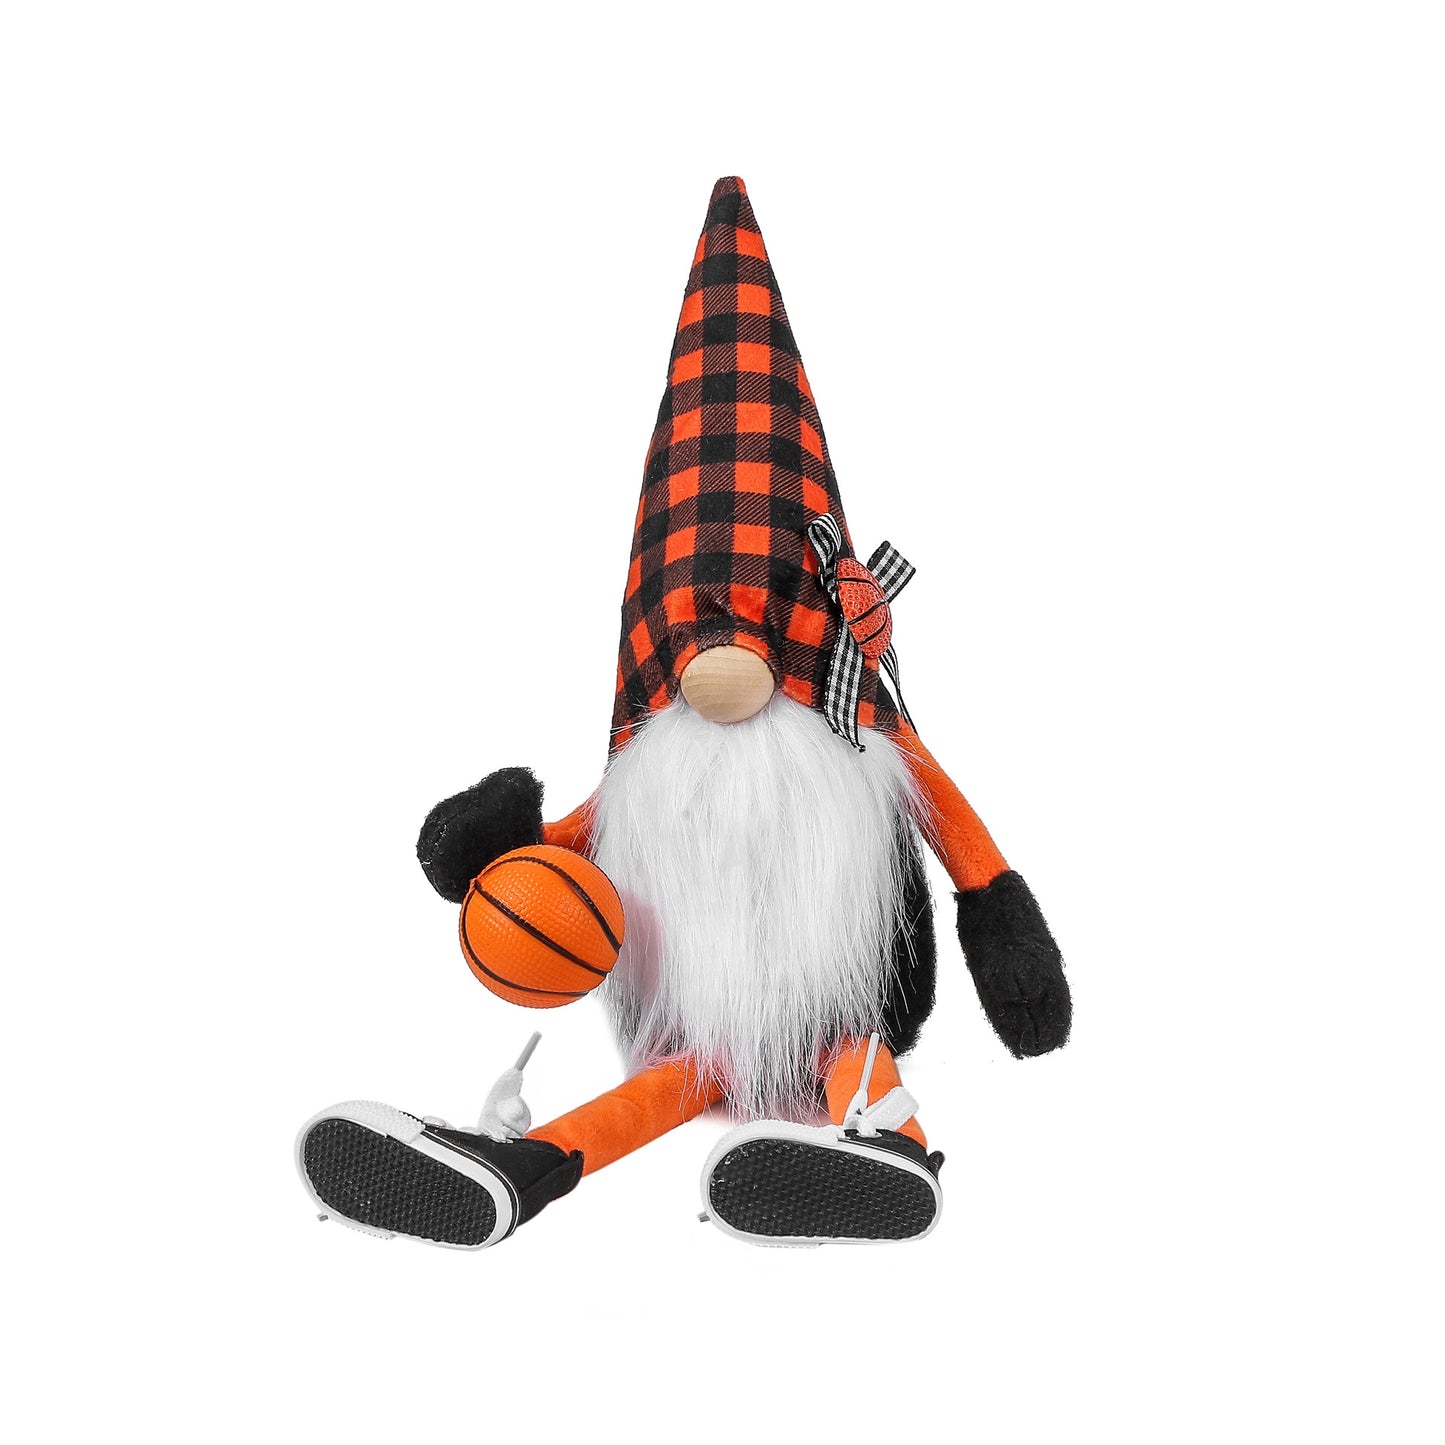 Leggy Basketball Football Gnome